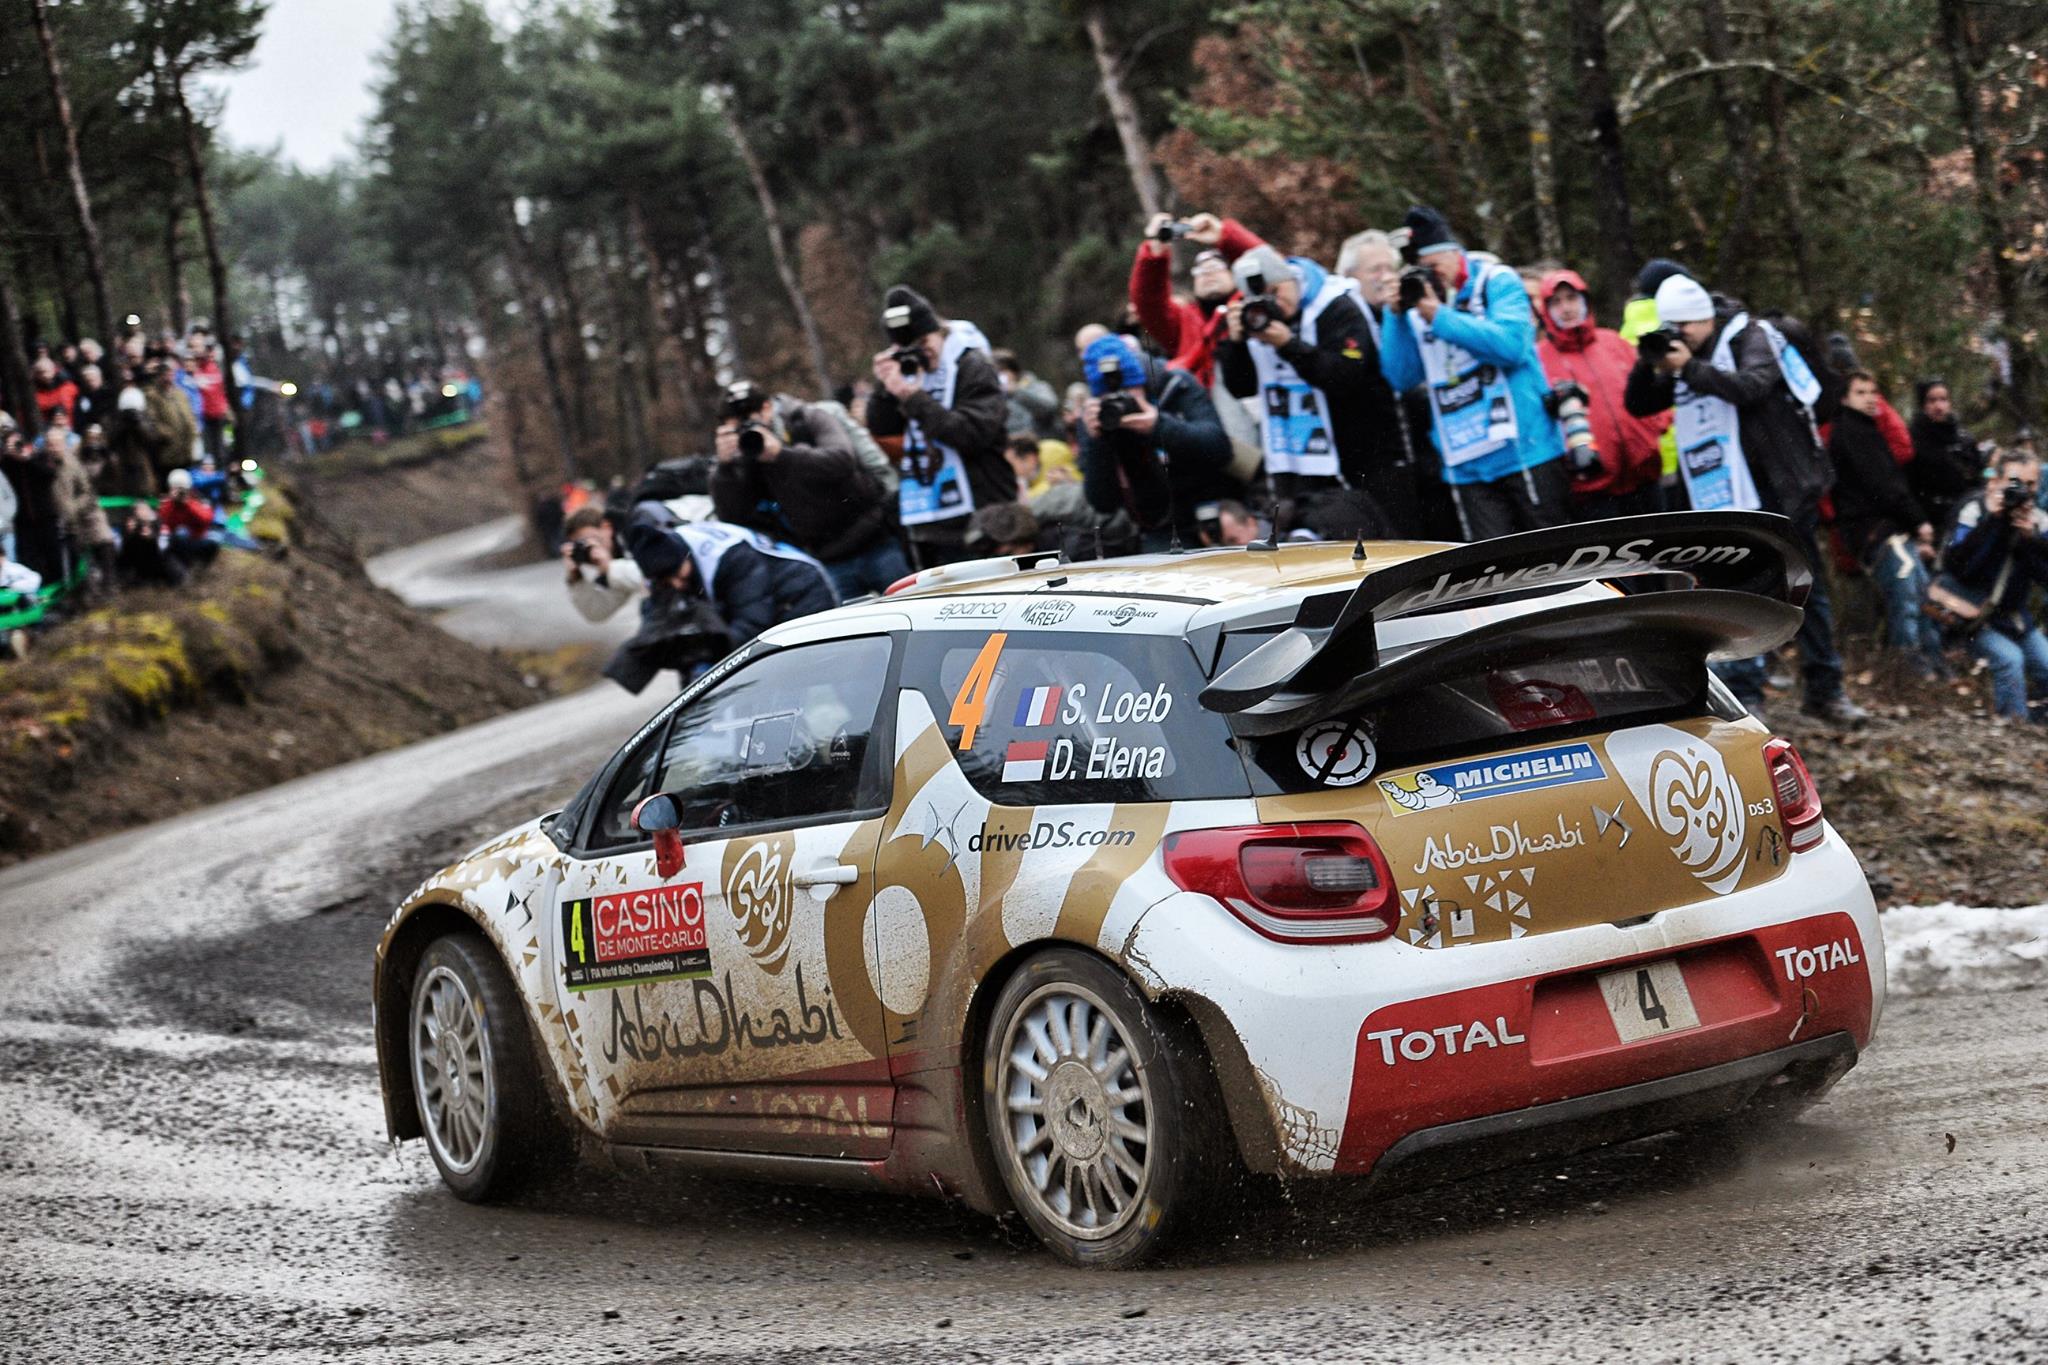 WRC: Rallye Monte Carlo 2015 : Αποτελέσματα Shakedown